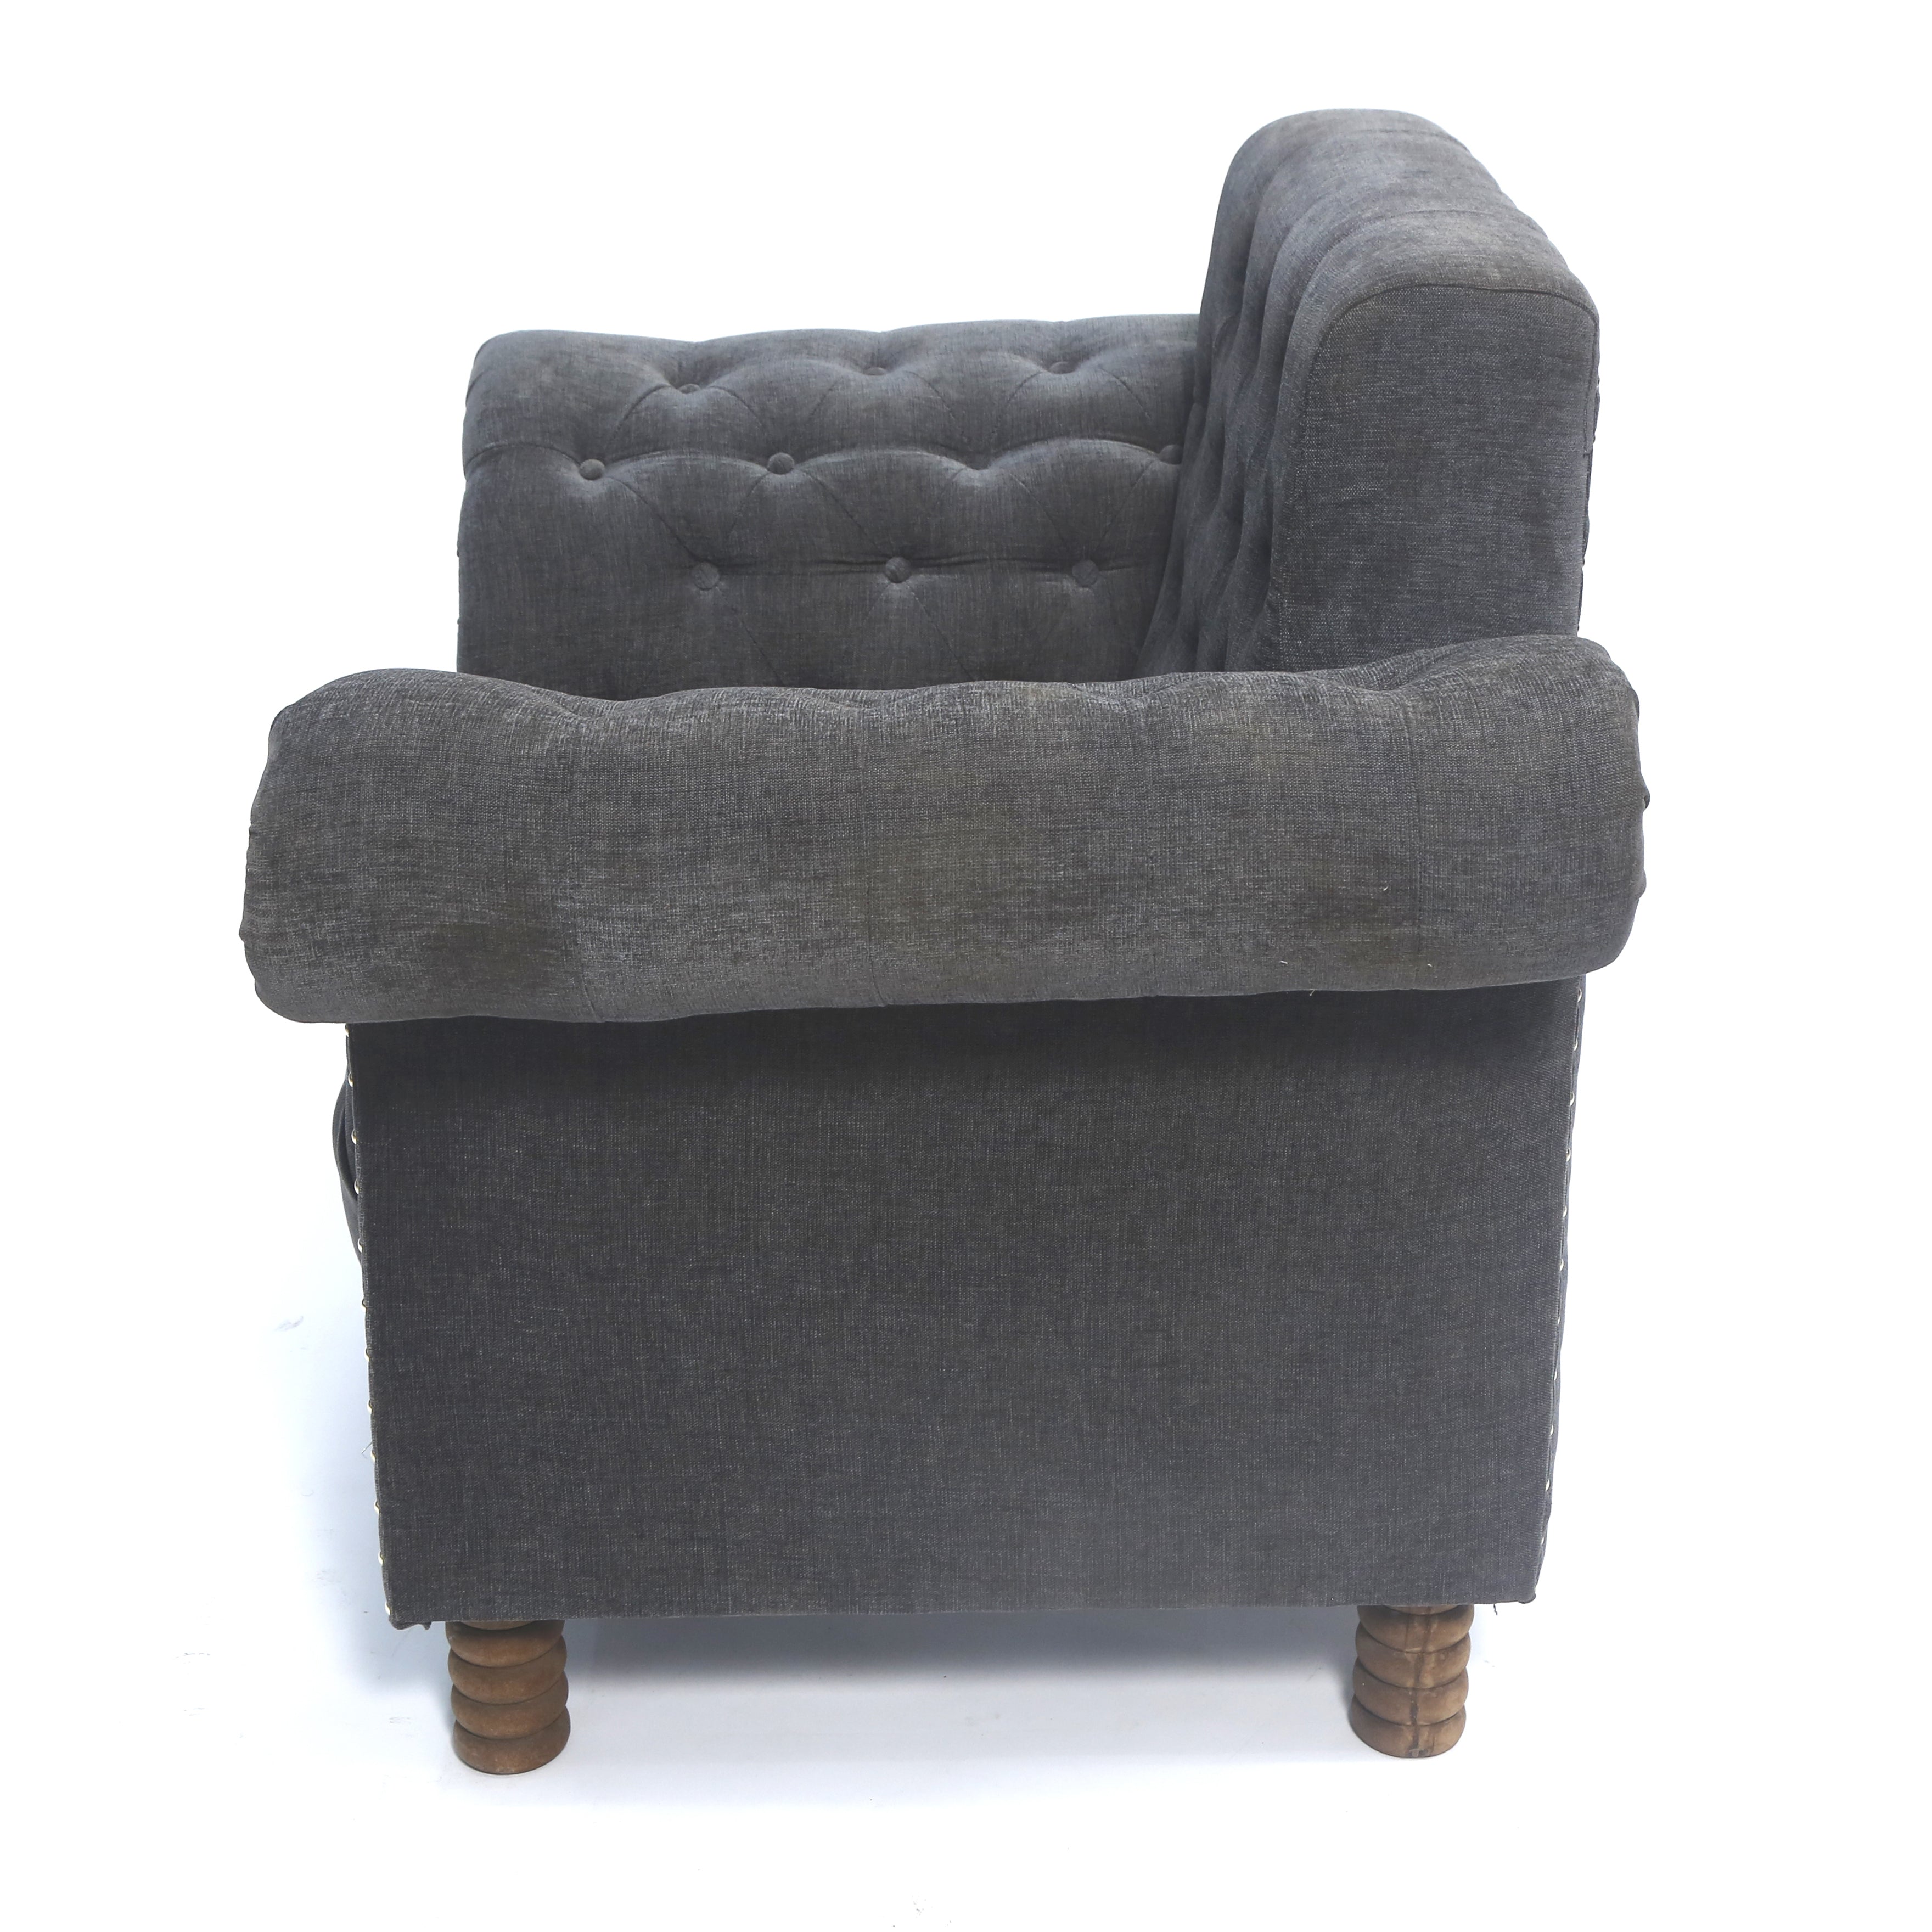 Upholstered Royal Curve single Seater Sofa Sofa